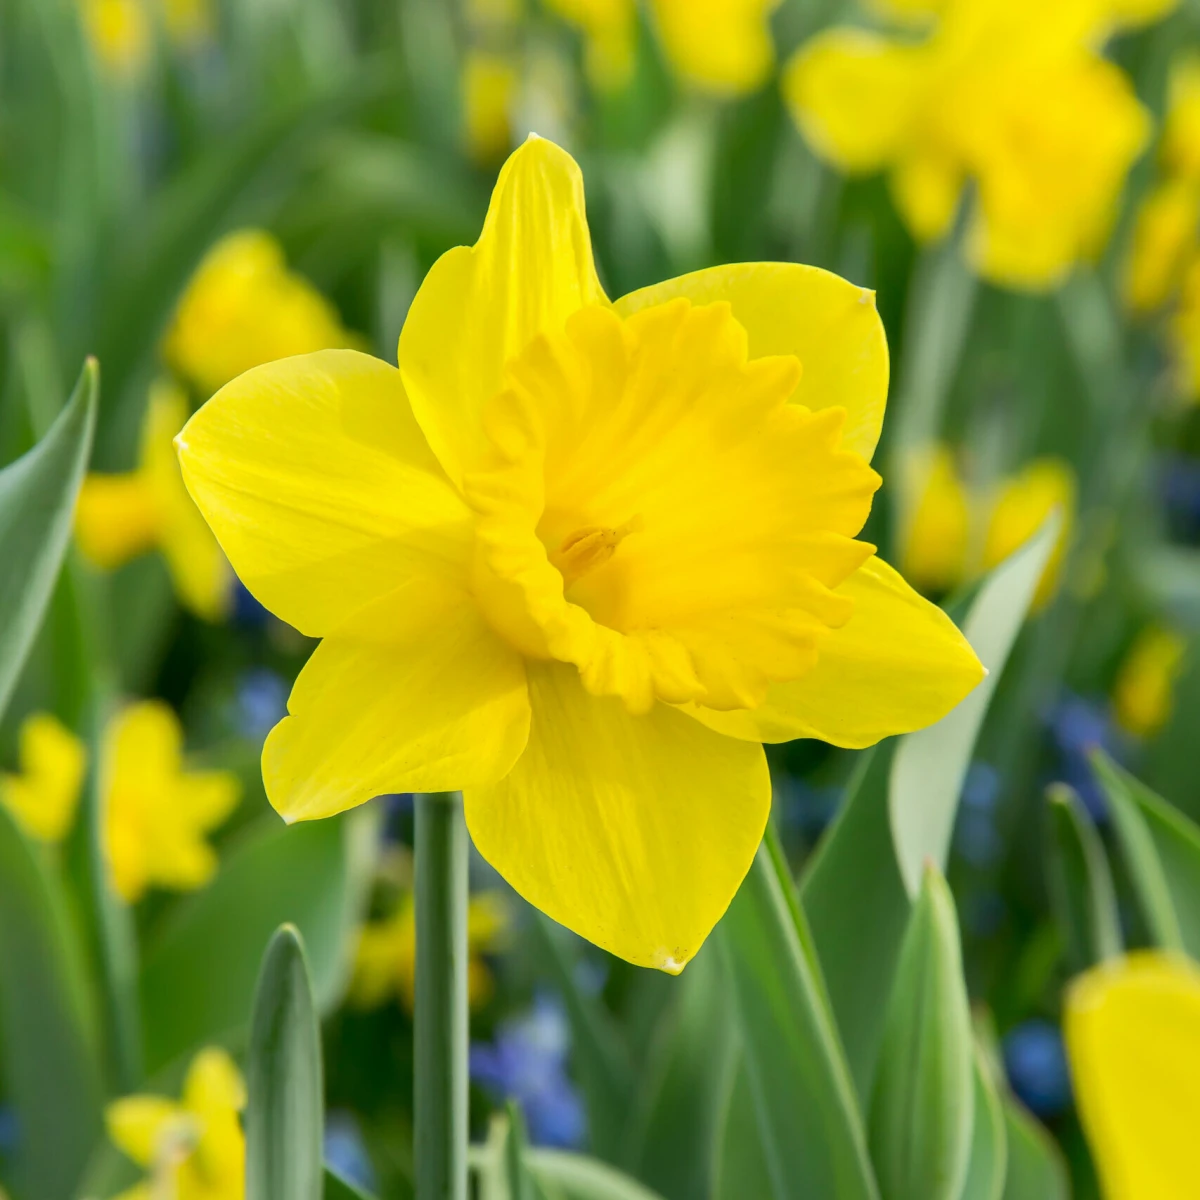 yellow daffodils in fields